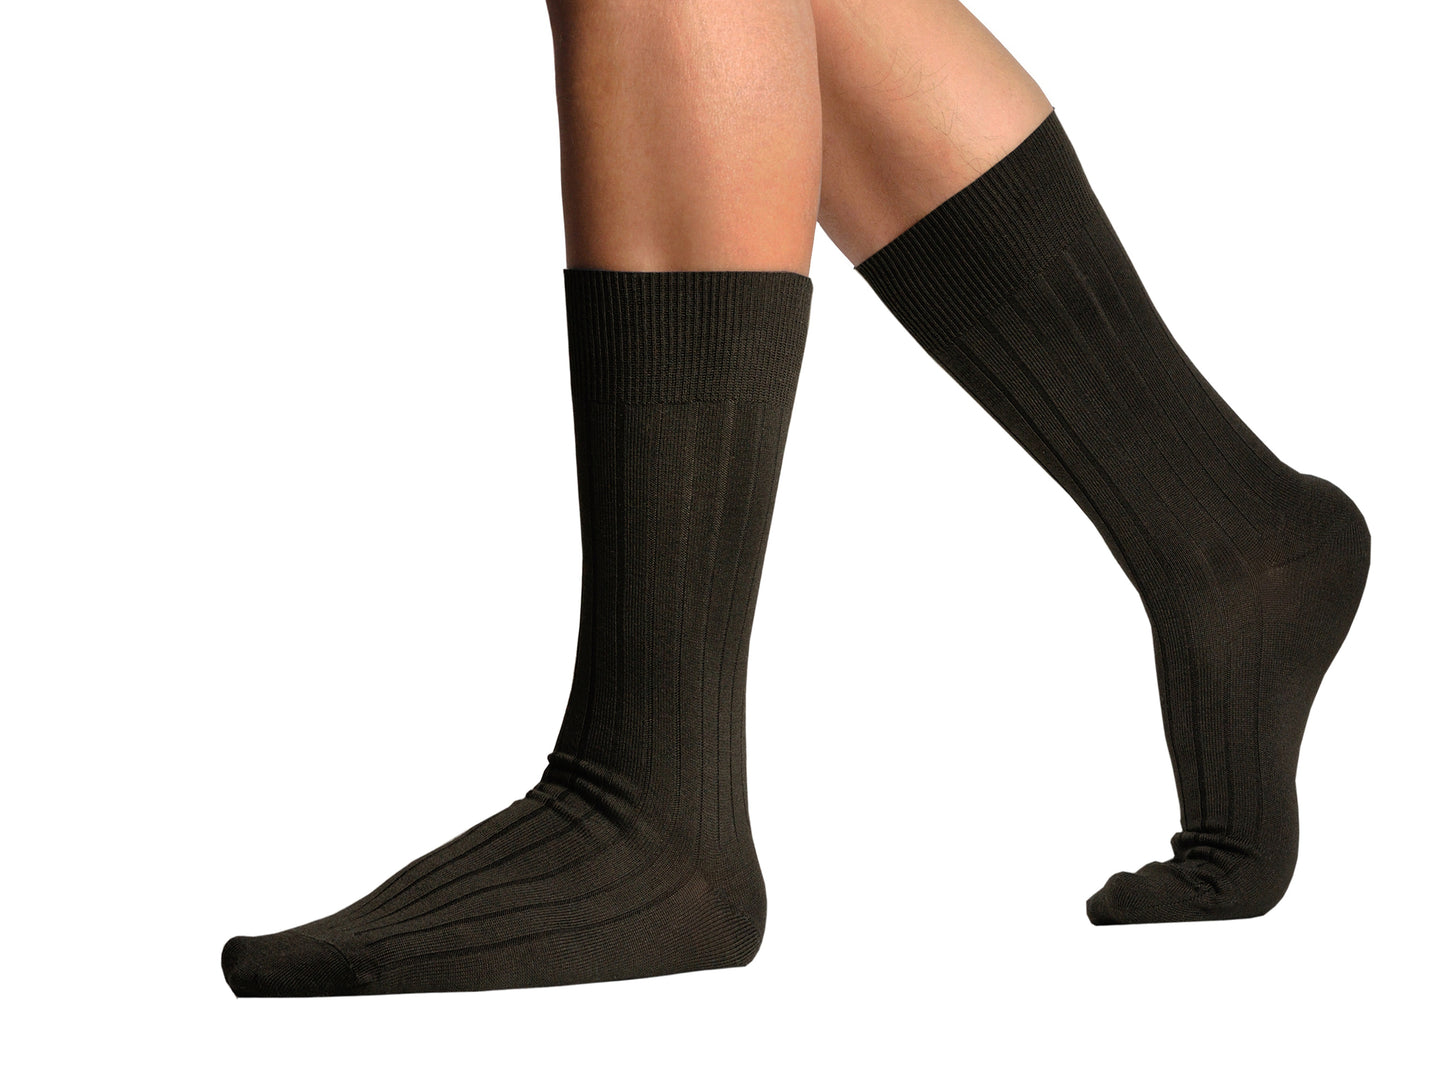 L.Martin Pima Cotton Crew Height Dress Socks for Men - 100% Cotton Interface - Dark Brown - 3Pair